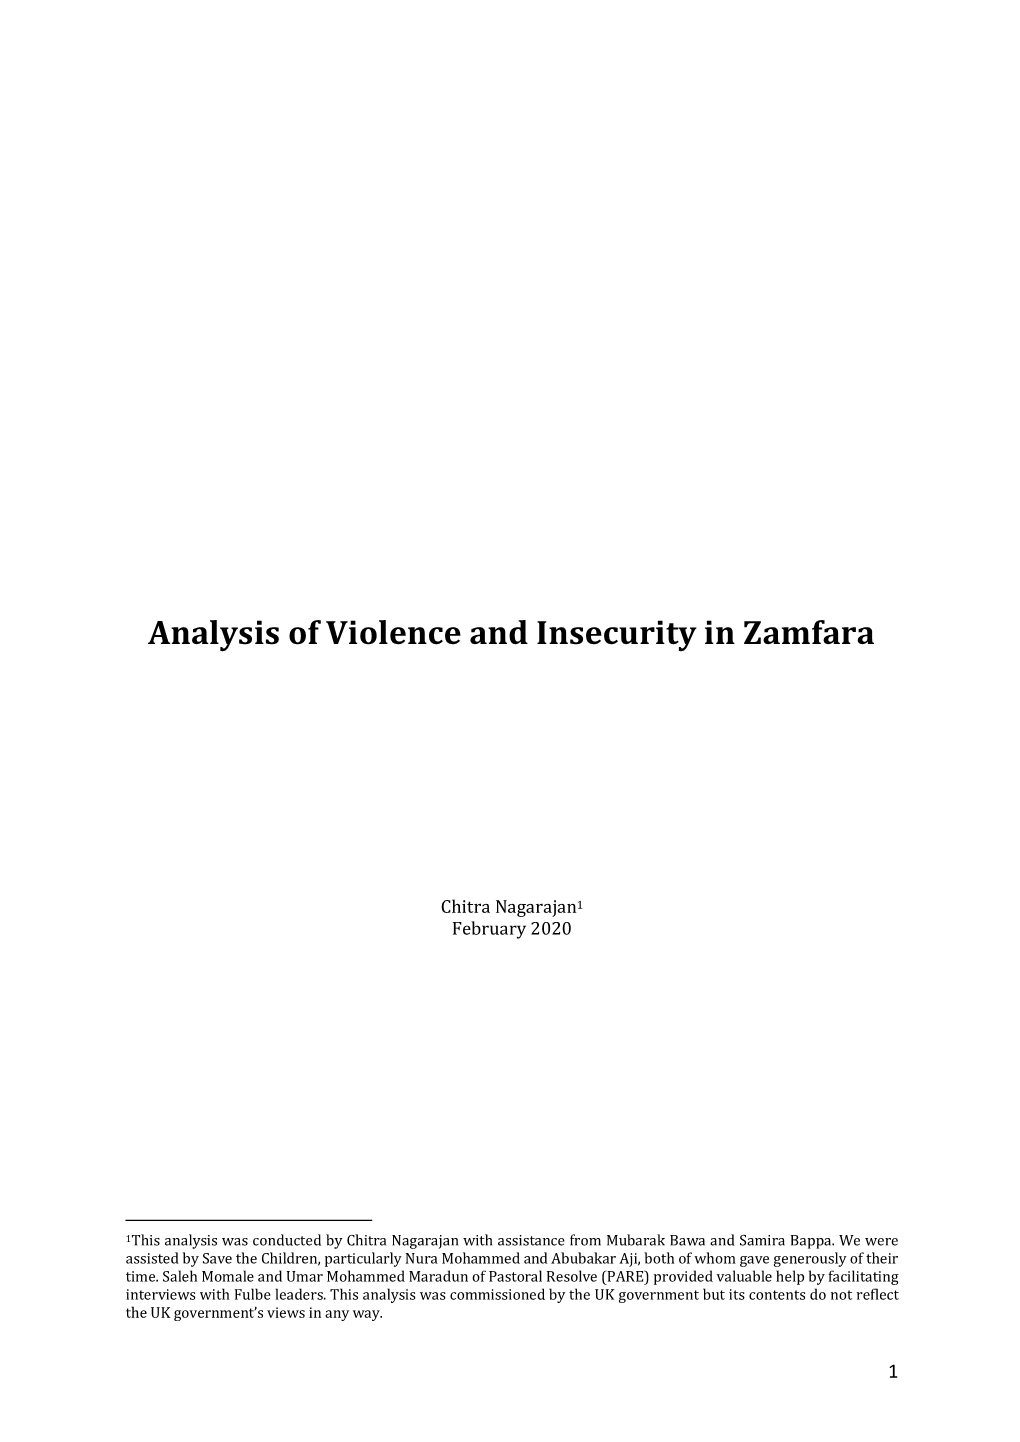 Zamfara Analysis of Violence and Insecurity